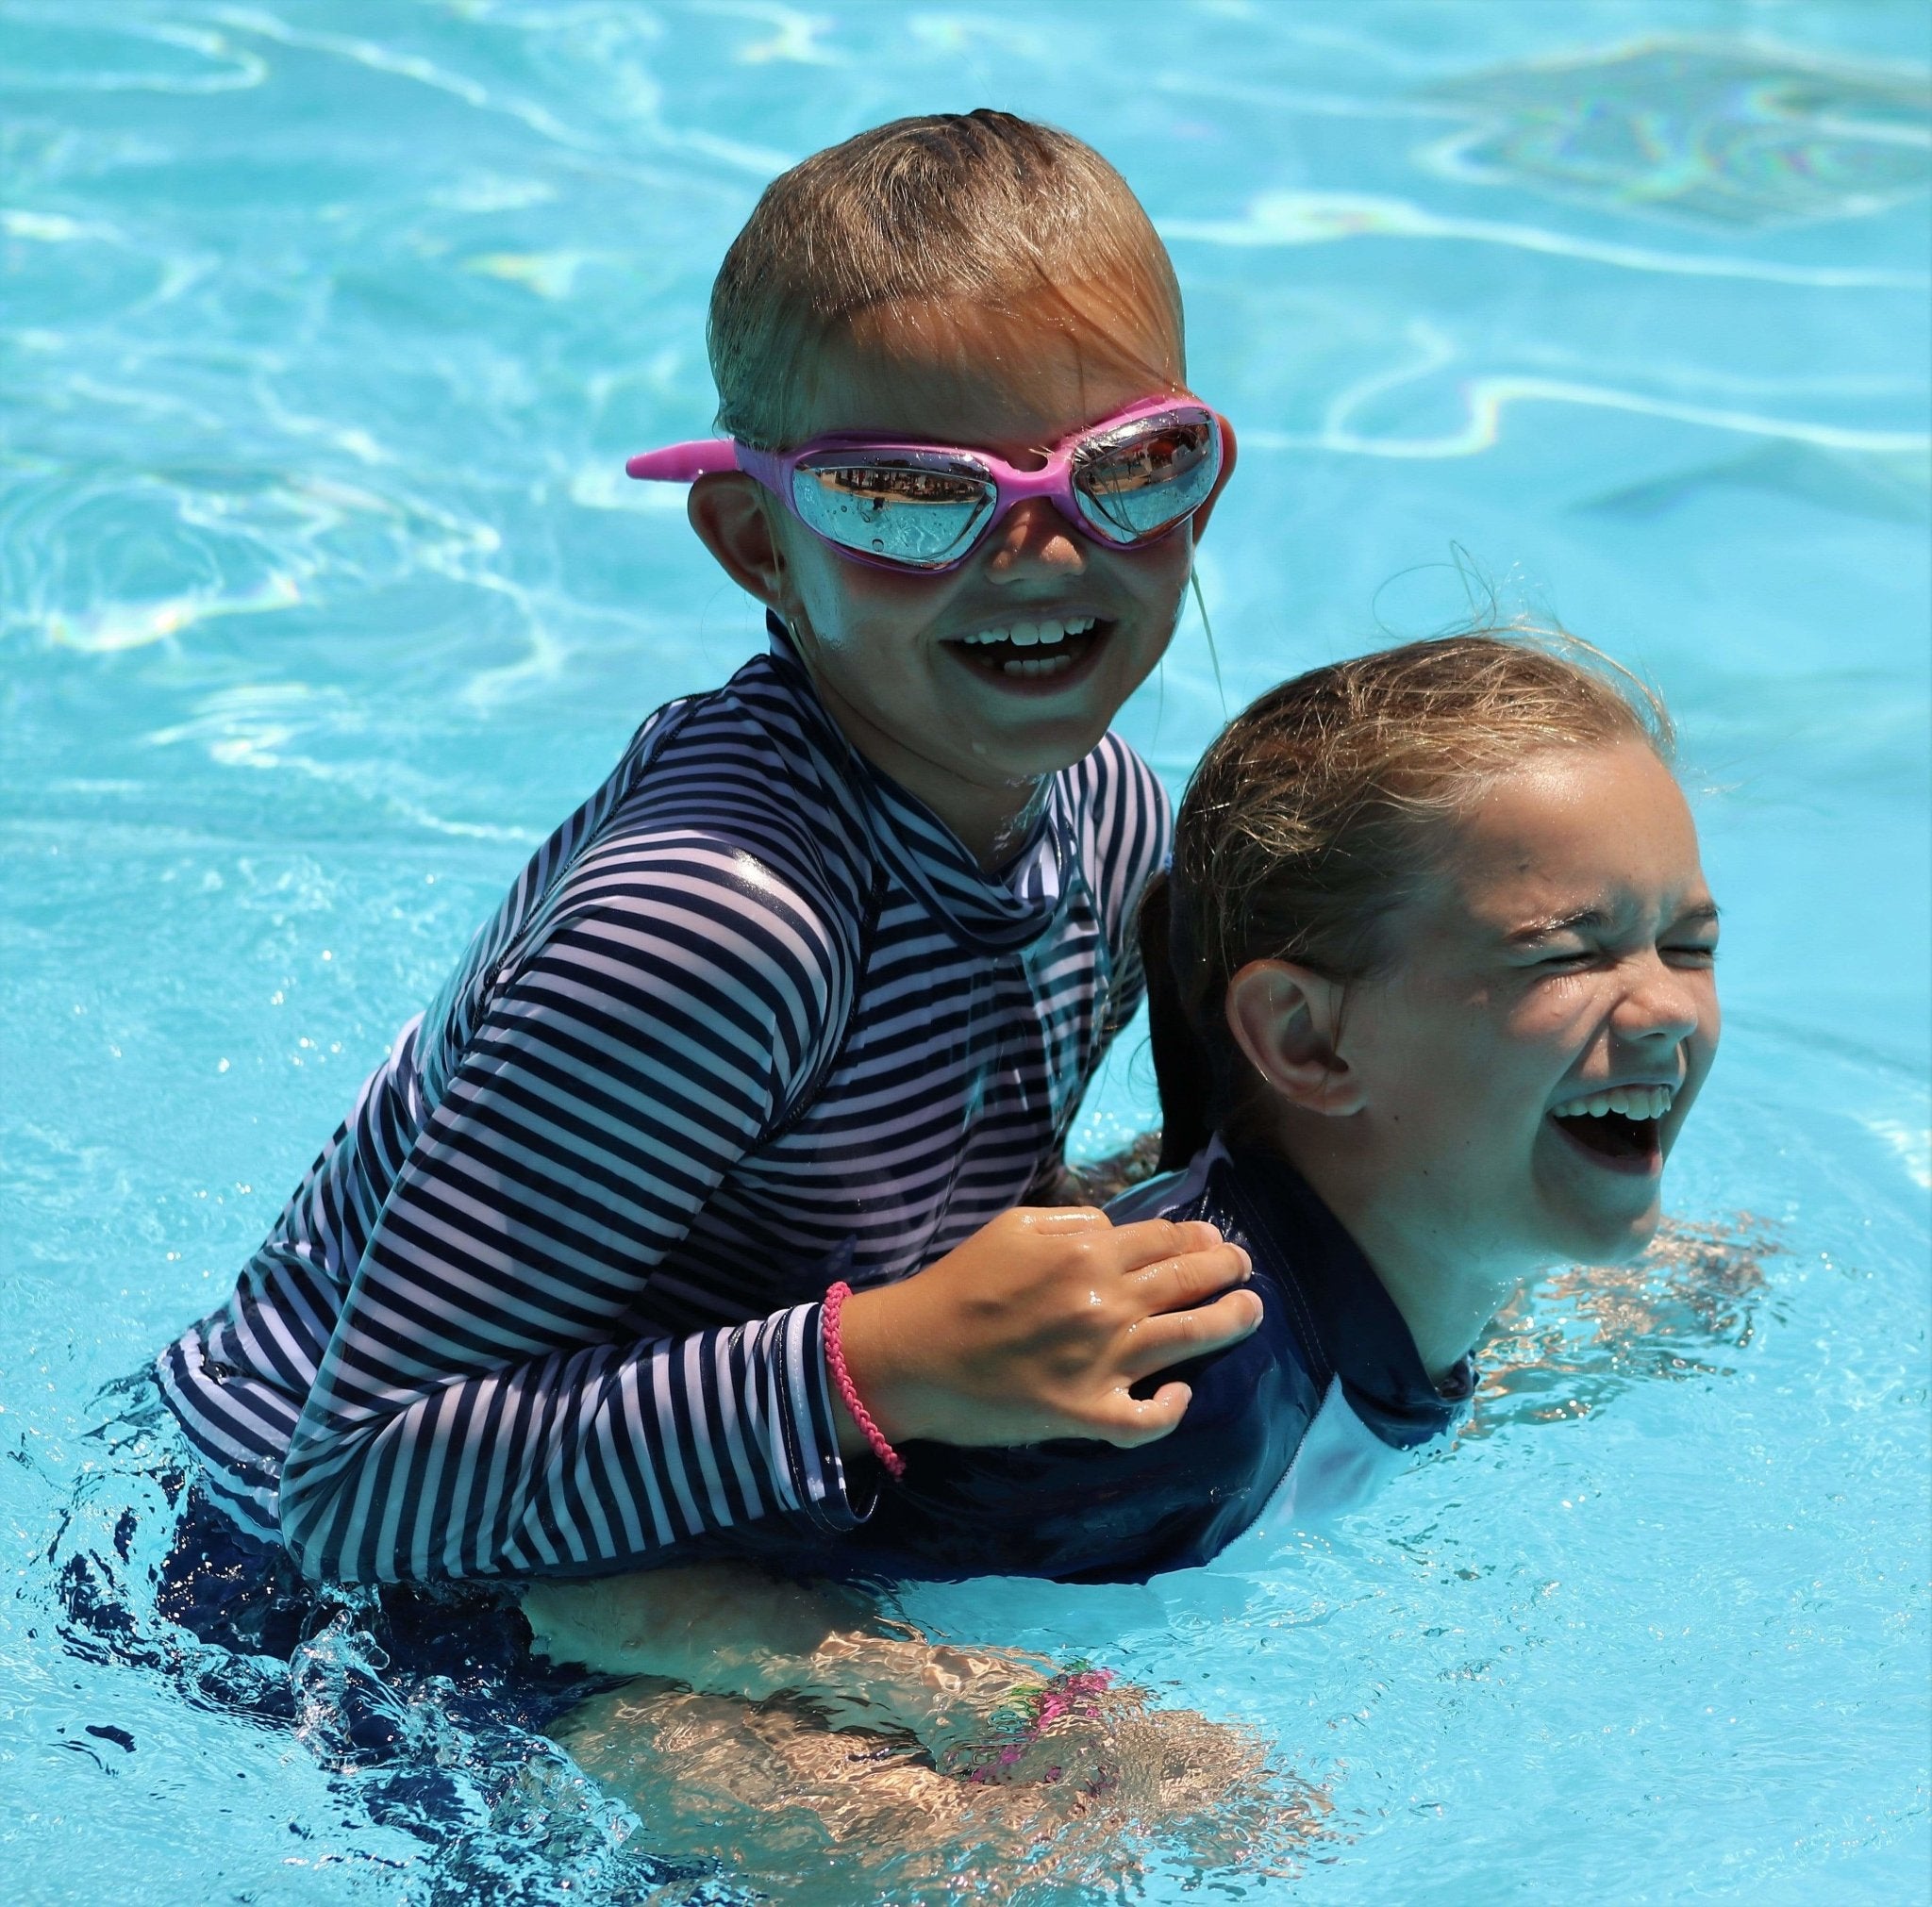 Beach Butterfly Kids Girls modest UPF 50+ UV protection Rash Vest Swim –  Jody and Lara